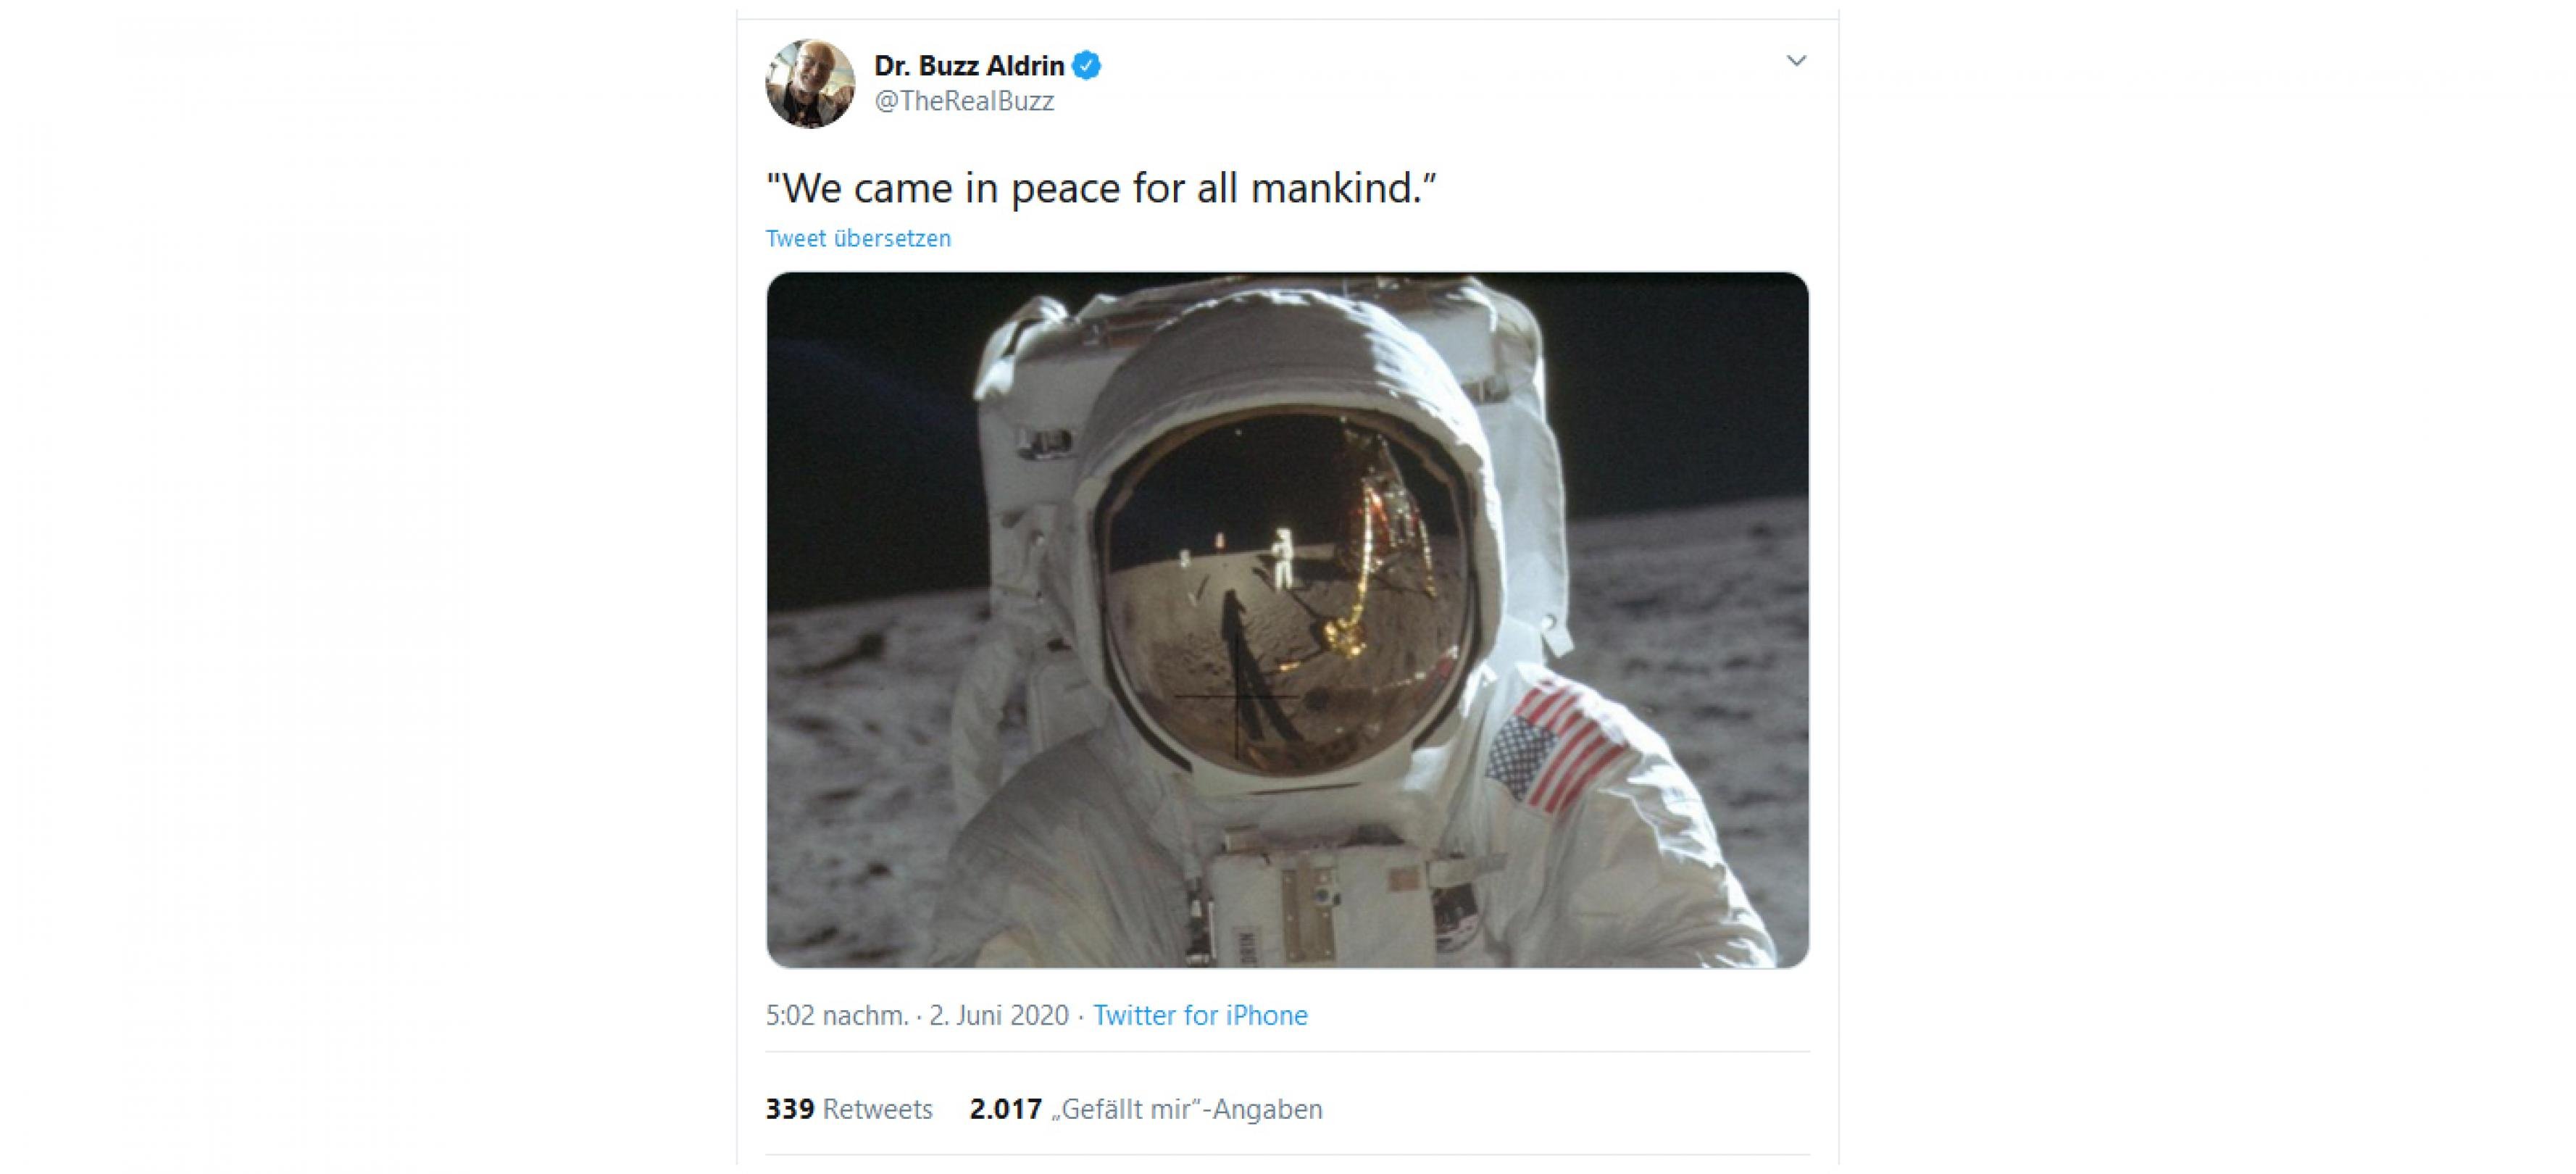 Buzz Aldrin, 1969 fotografiert von Neil Armstrong auf dem Mond. We came in peace for all mankind.